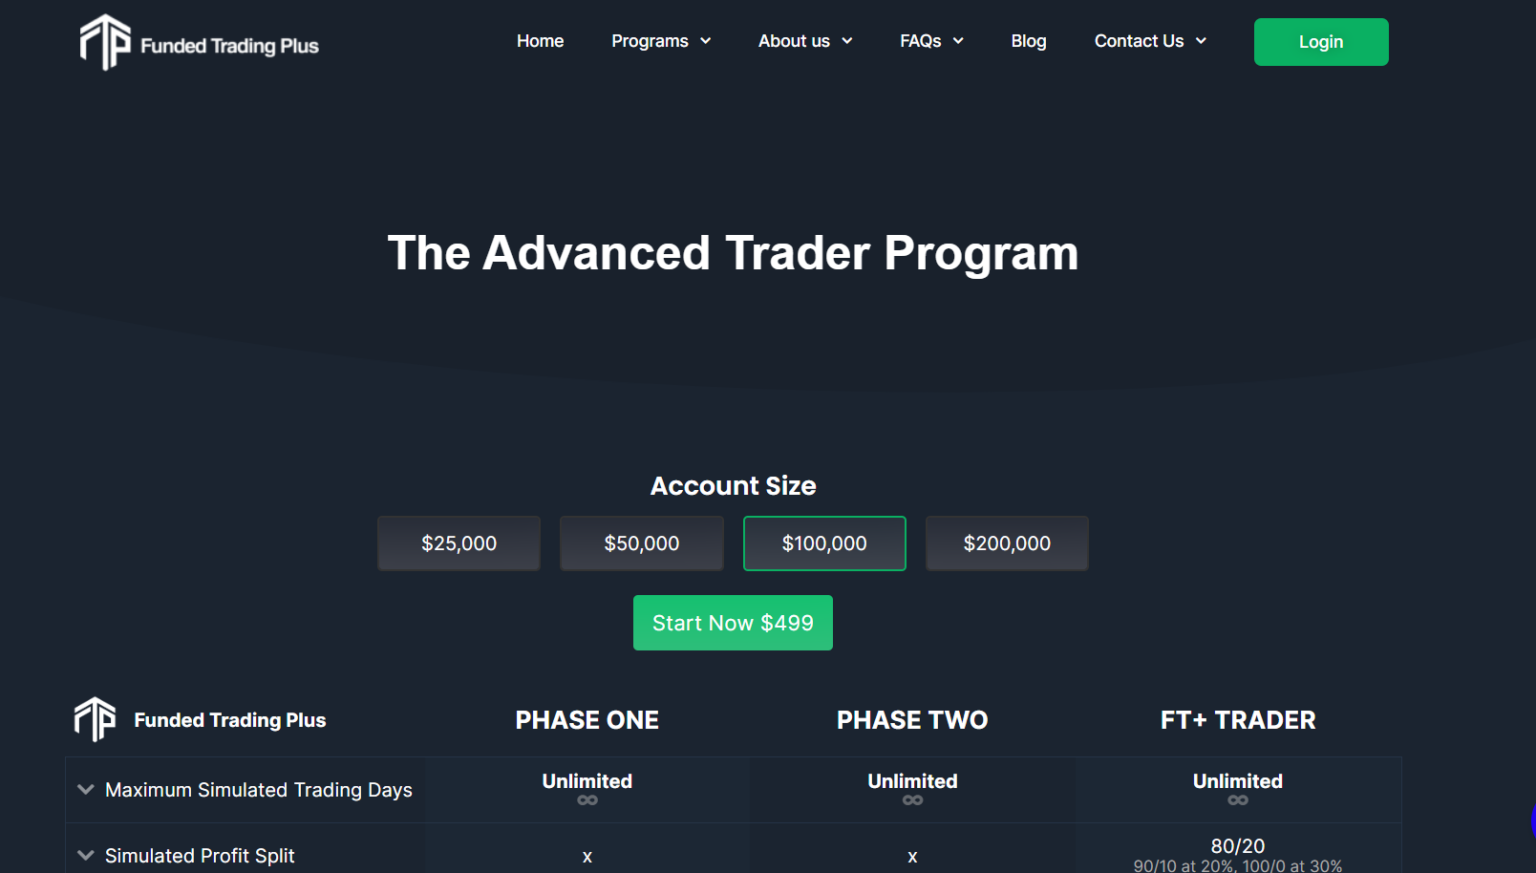 Funded trading plus advanced trader program